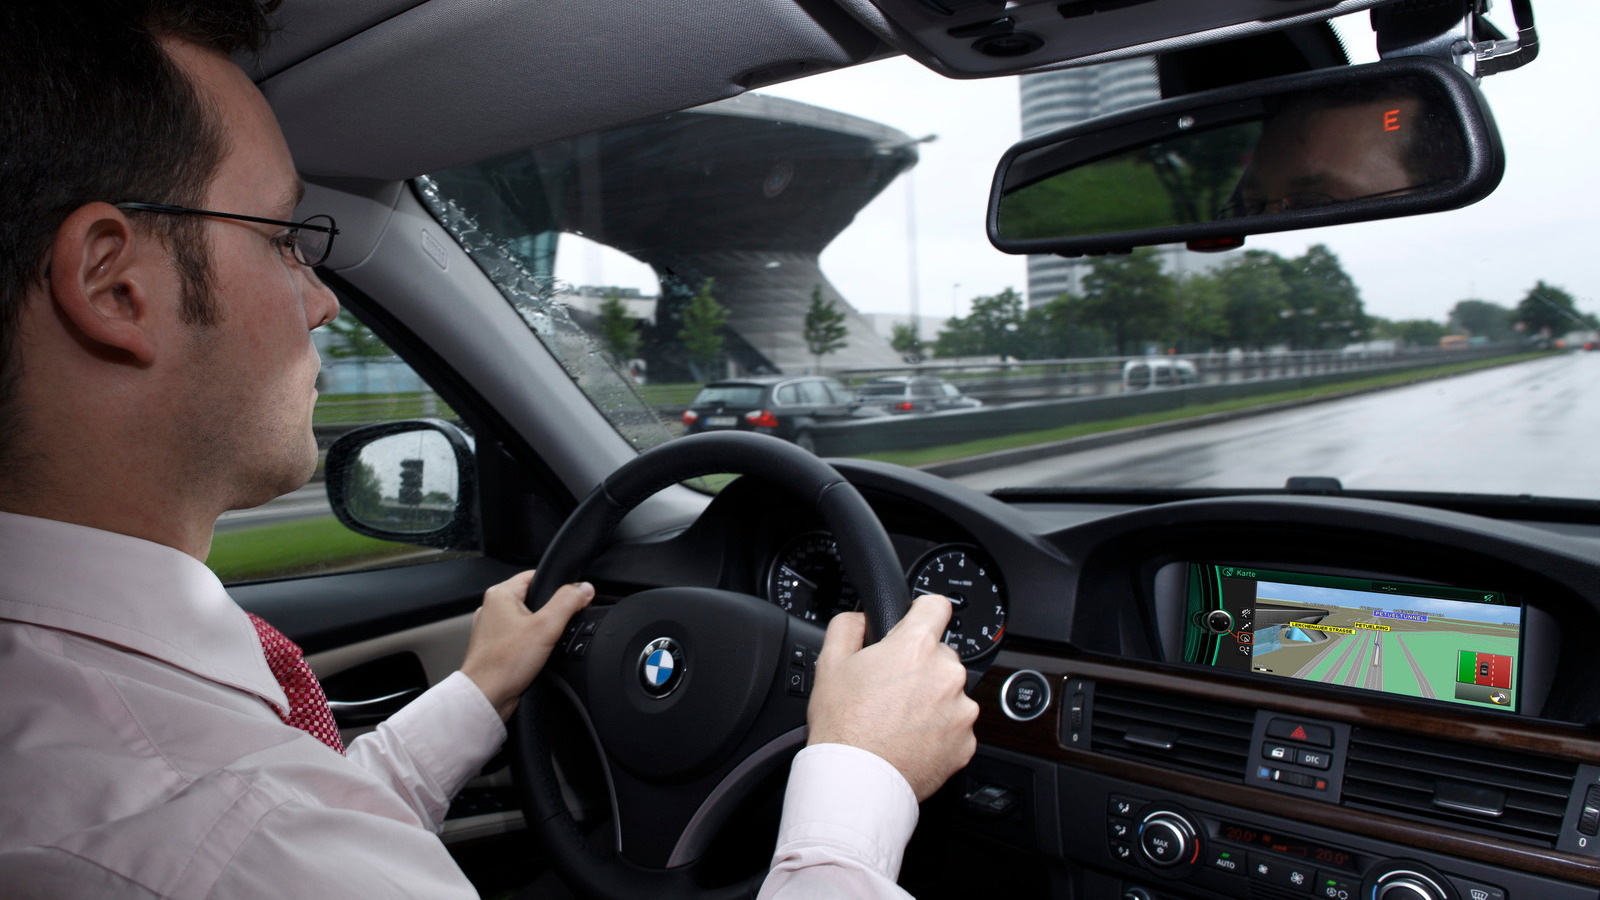 BMW Pathfinder "micronavigation" system prototype